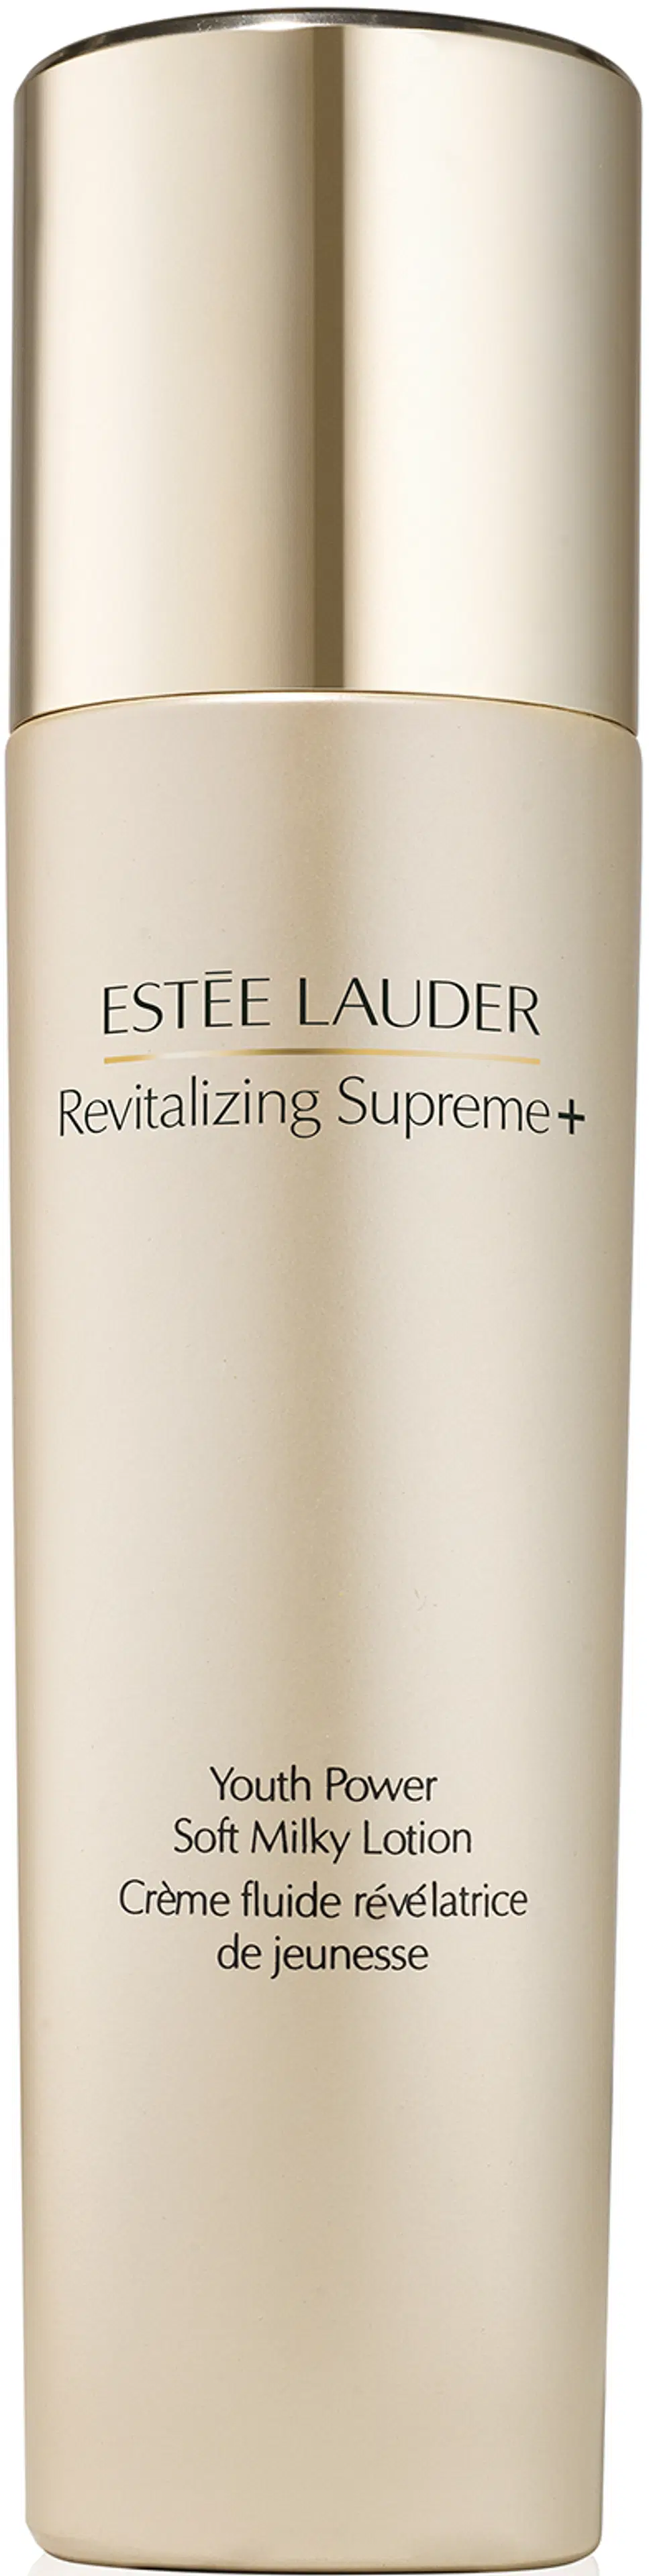 Estée Lauder Revitalizing Supreme+ Youth Power Soft Milky Lotion hoitovesi 100 ml